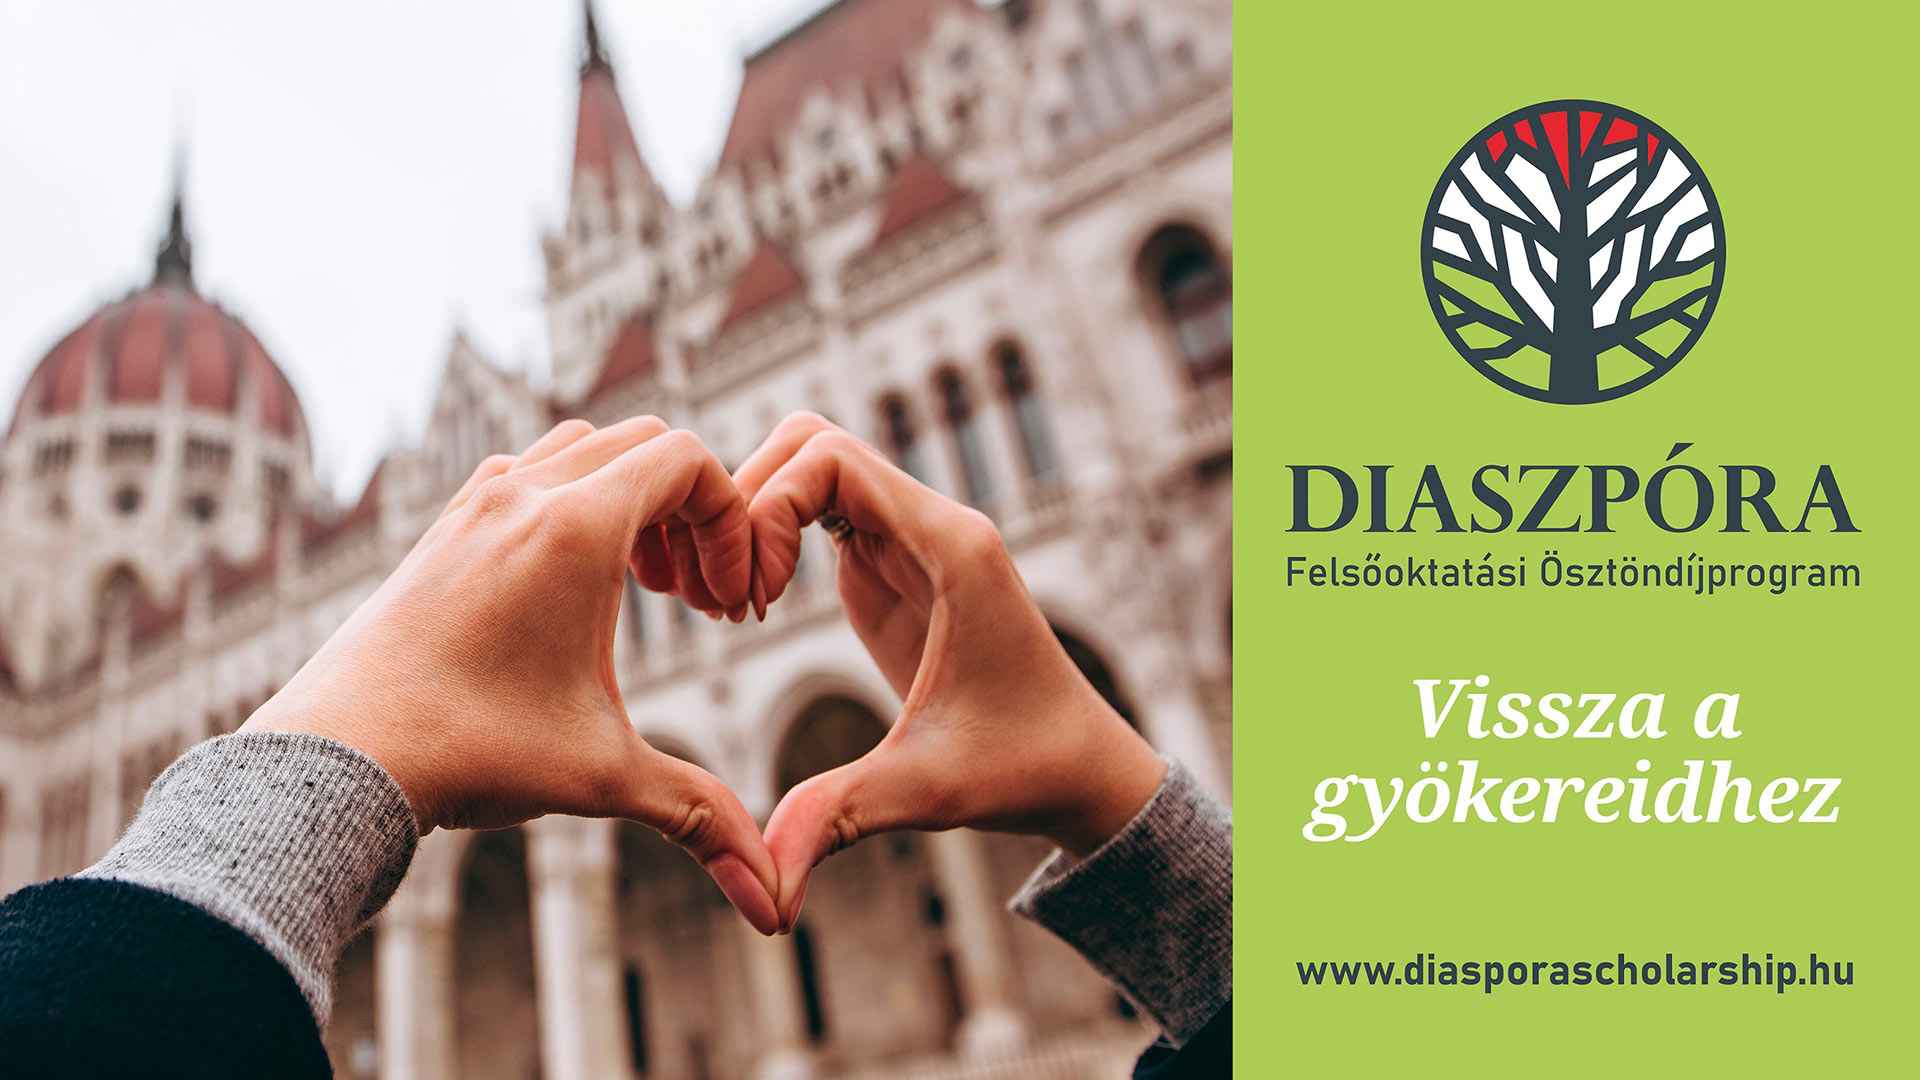 Online application for the Hungarian Diaspora Scholarship Programme opens